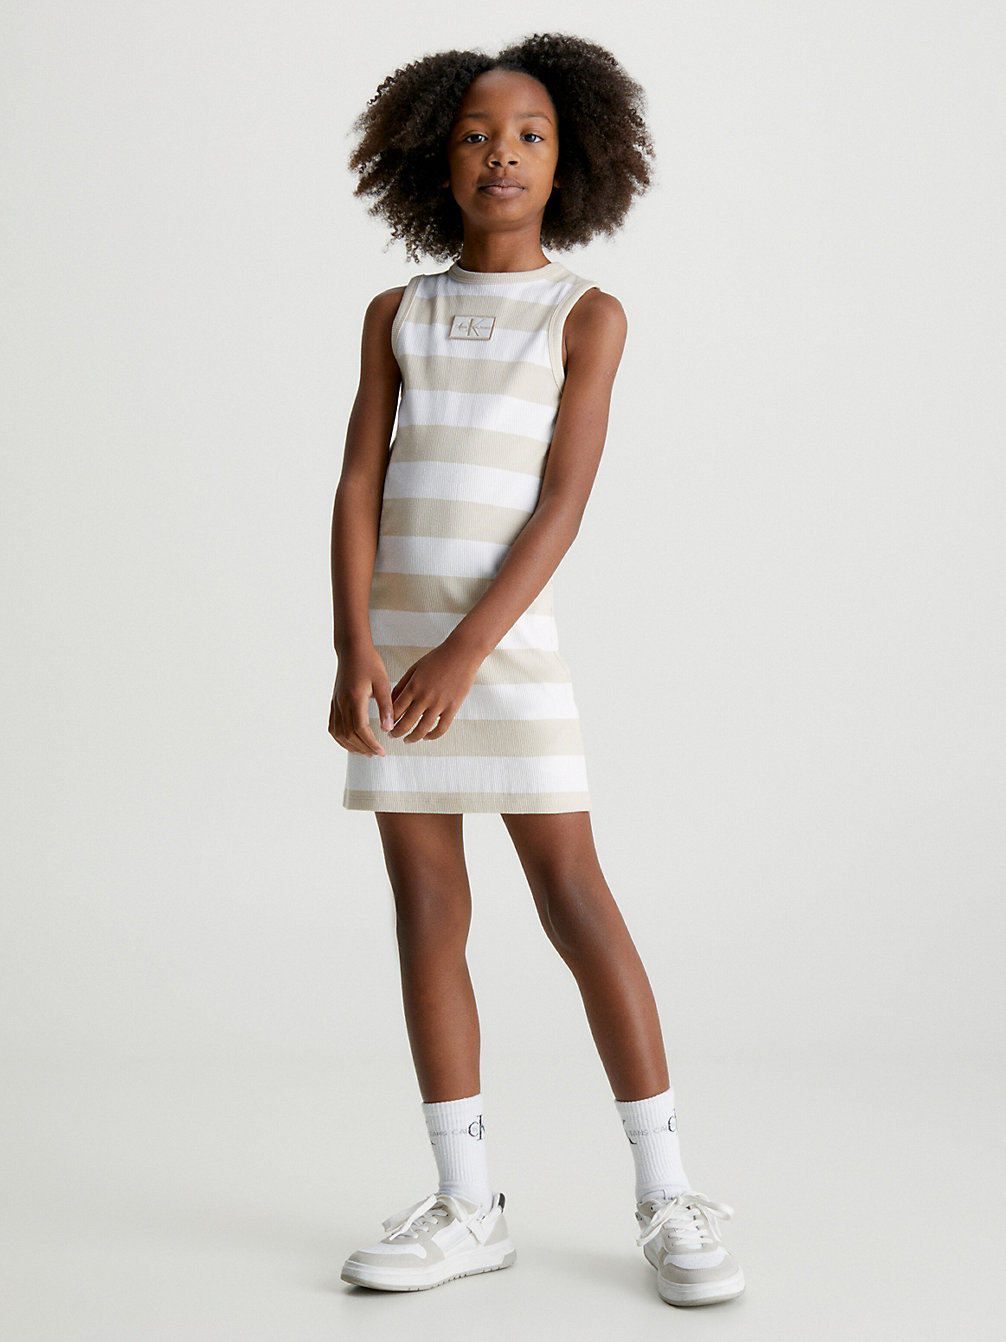 BRIGHT WHITE/ CLASSIC BEIGE Ribbed Sleeveless Dress undefined girls Calvin Klein